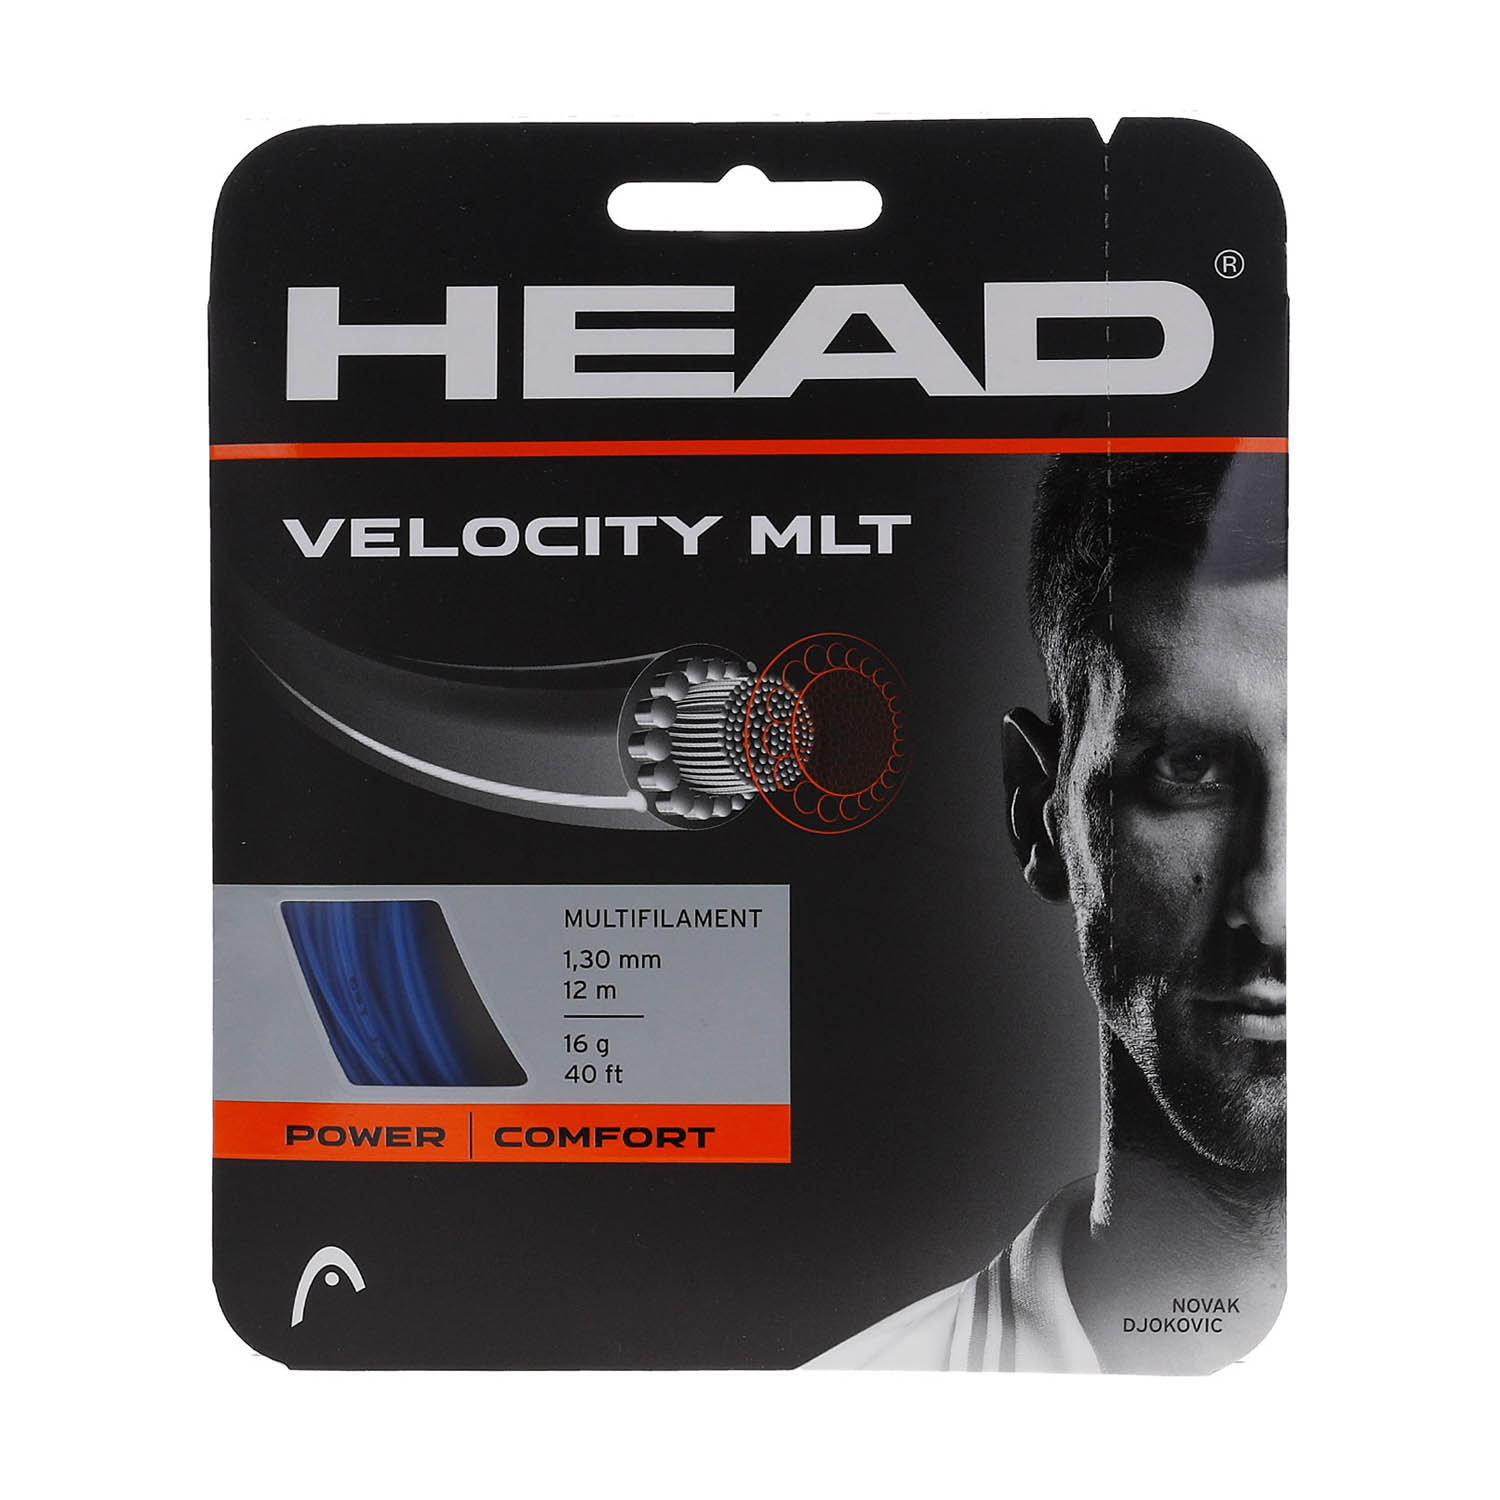 Head MultiPower Velocity 1.30 Set 12 m - Blue